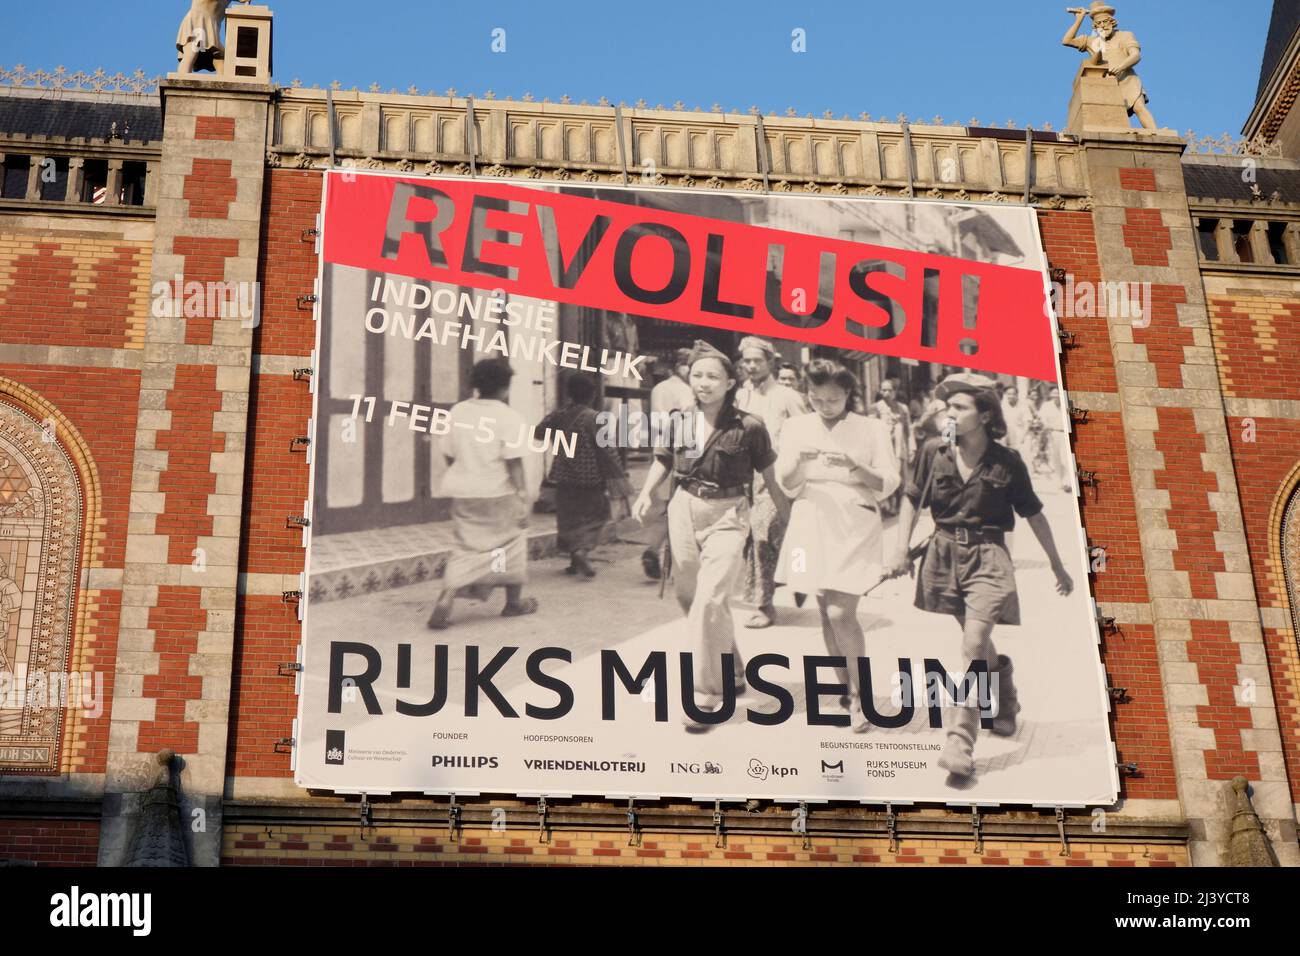 Revolusi Billboard at Amsterdam Rijksmuseum, Amsterdam, The Netherlands. Stock Photo